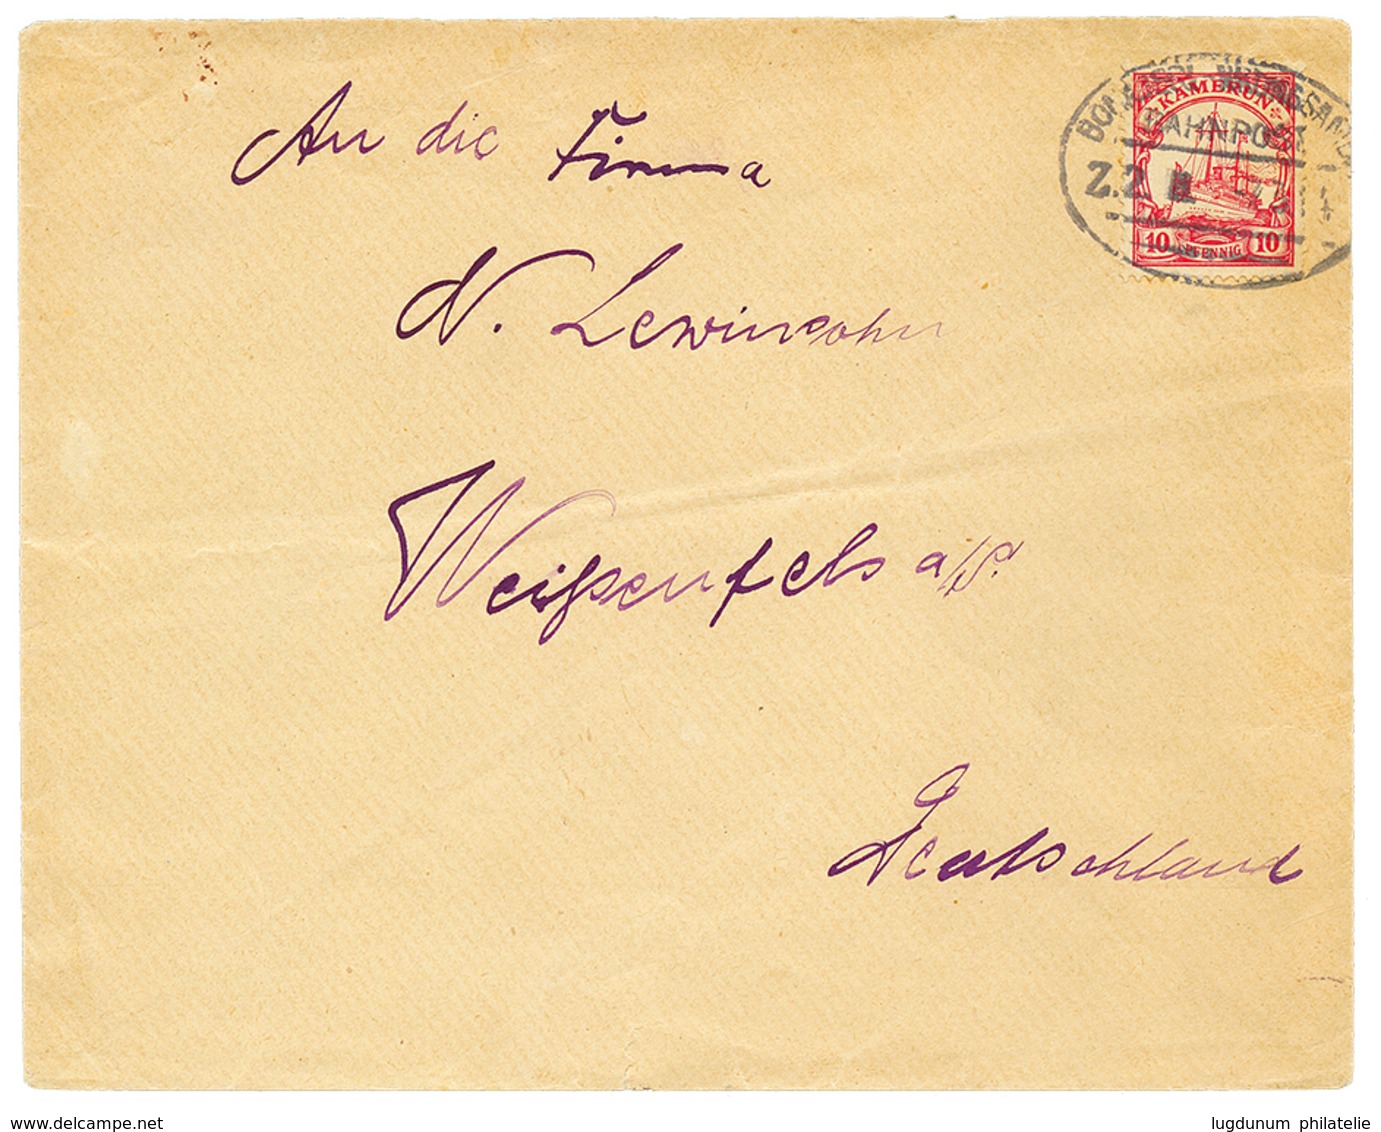 1092 1914 10pf Canc. BONABERI-NKONSAMBA/BAHNPOST/Z.2 On Envelope To GERMANY. Signed EIBENSTEIN. Vf. - Cameroun